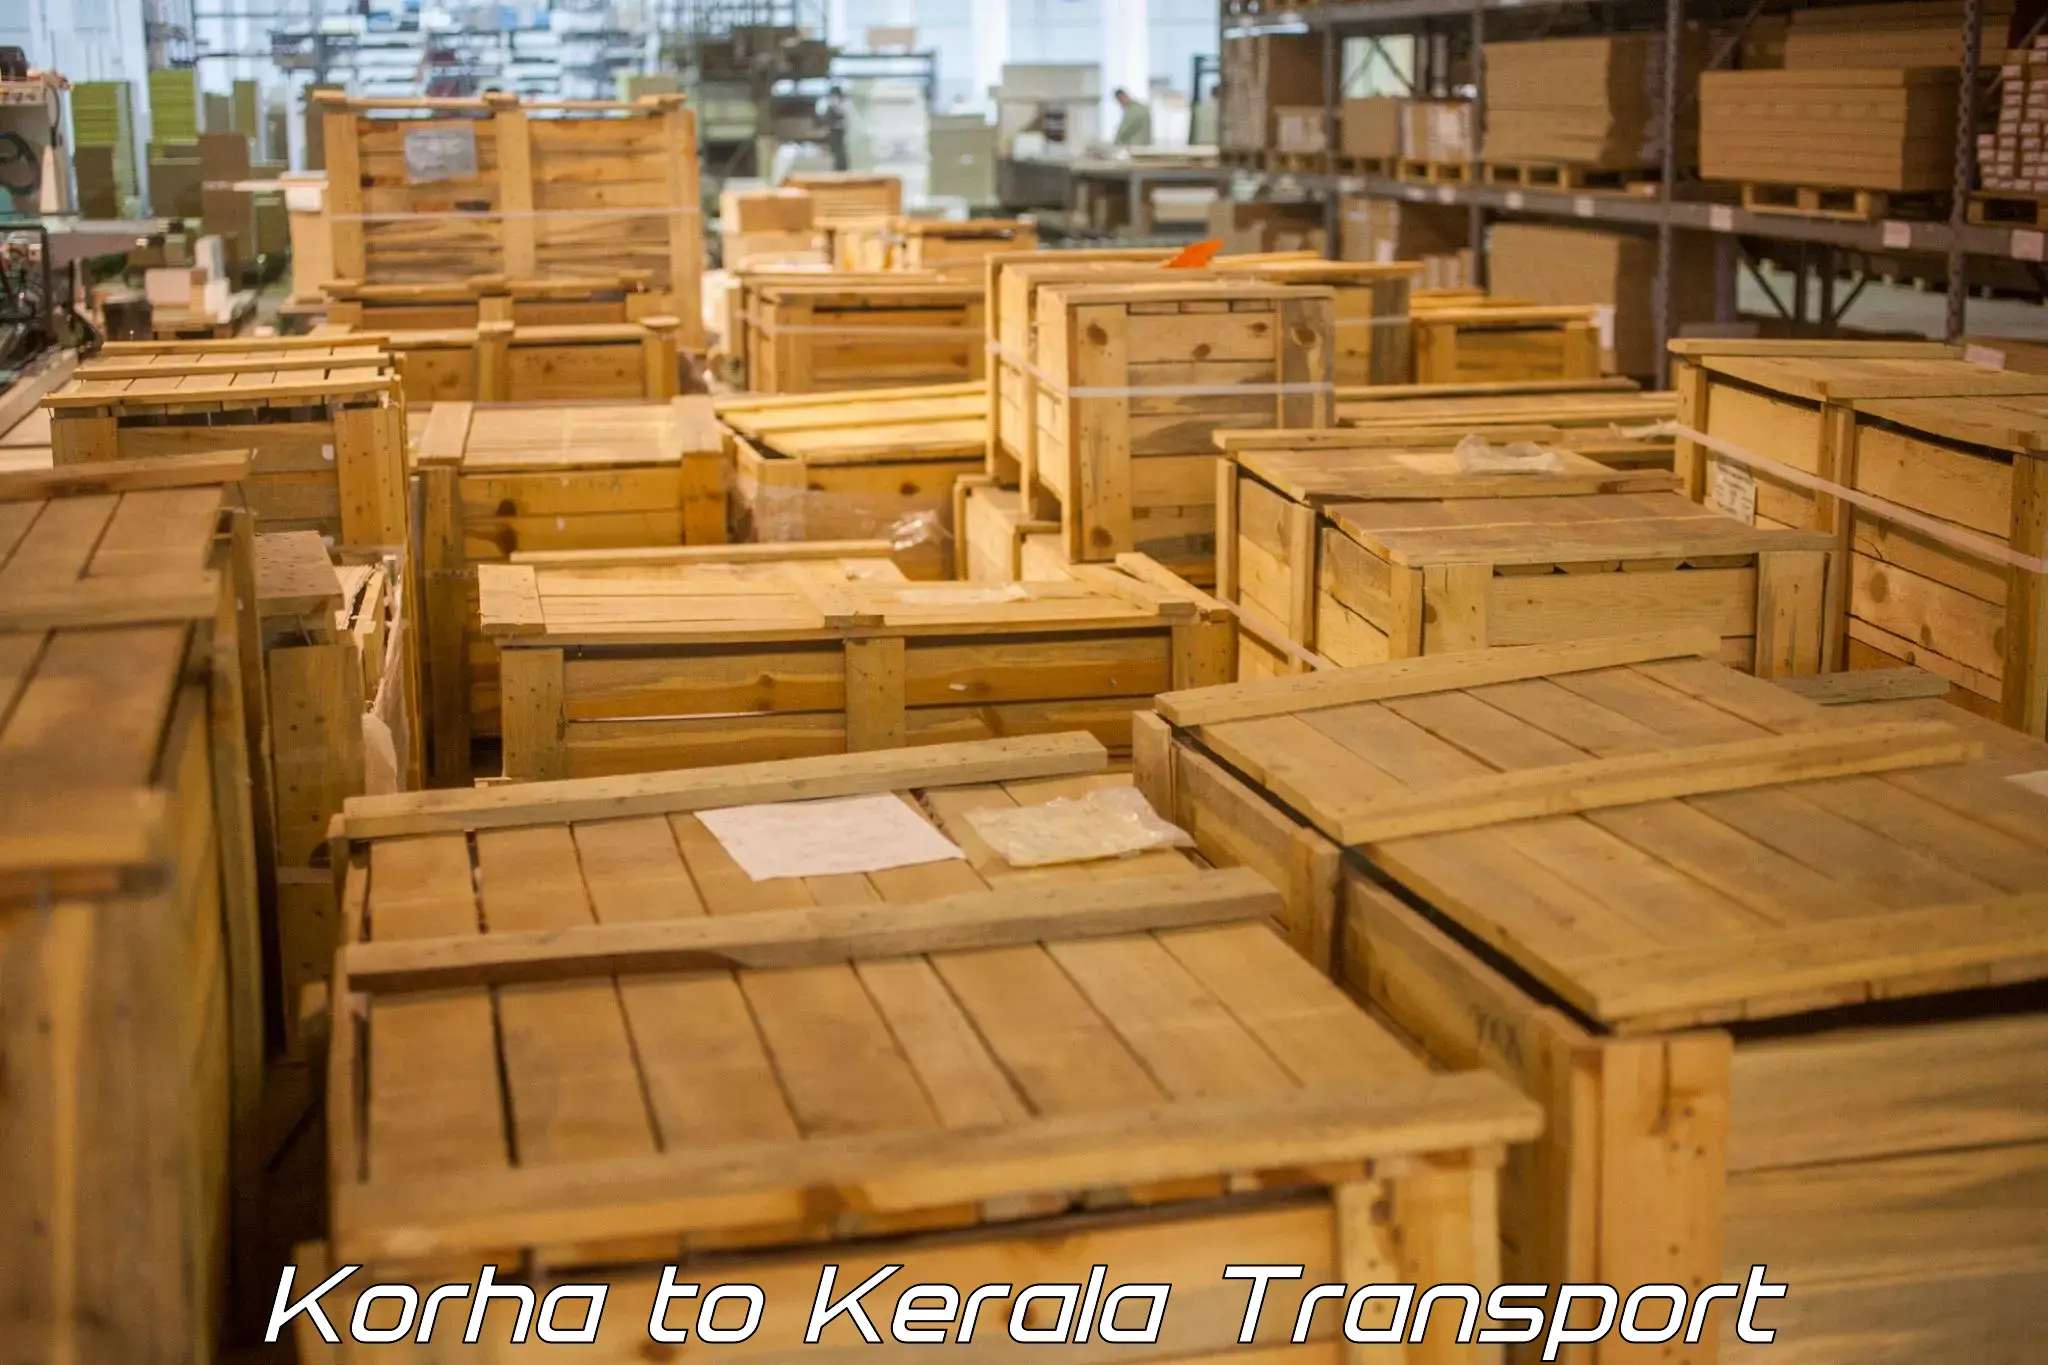 Daily transport service Korha to Akaloor